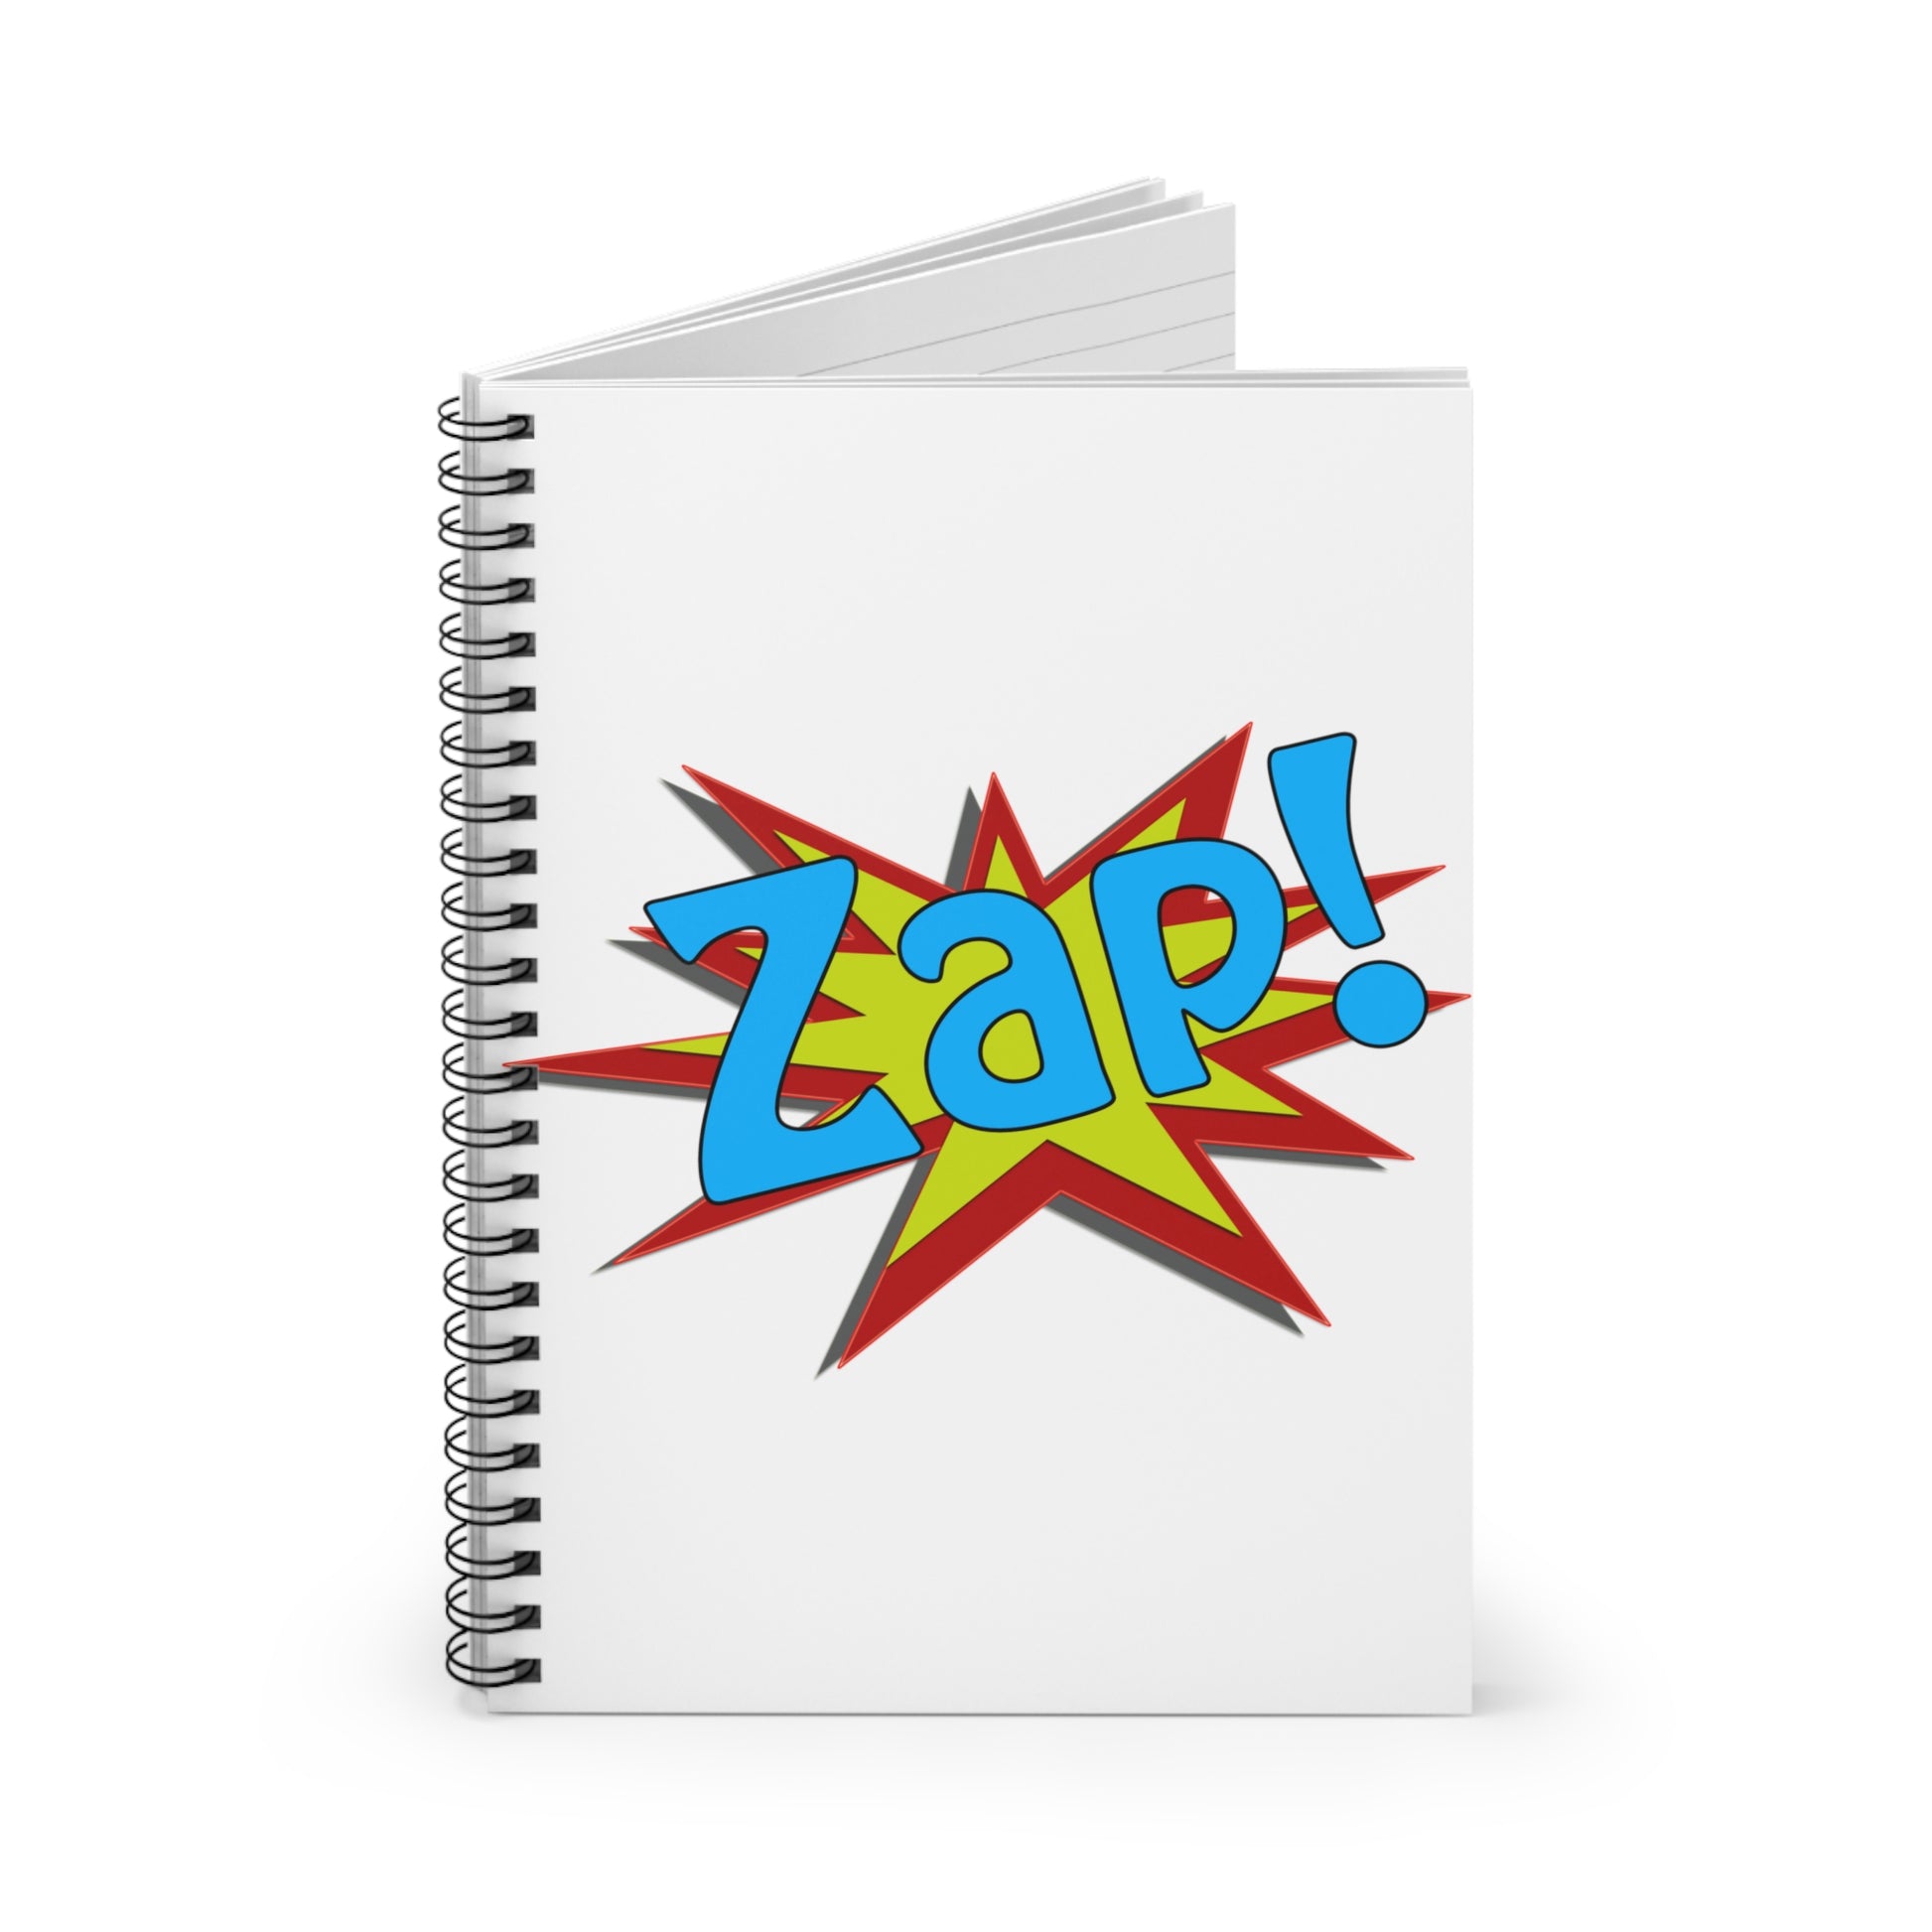 Superhero ZAP: Spiral Notebook - Log Books - Journals - Diaries - and More Custom Printed by TheGlassyLass.com